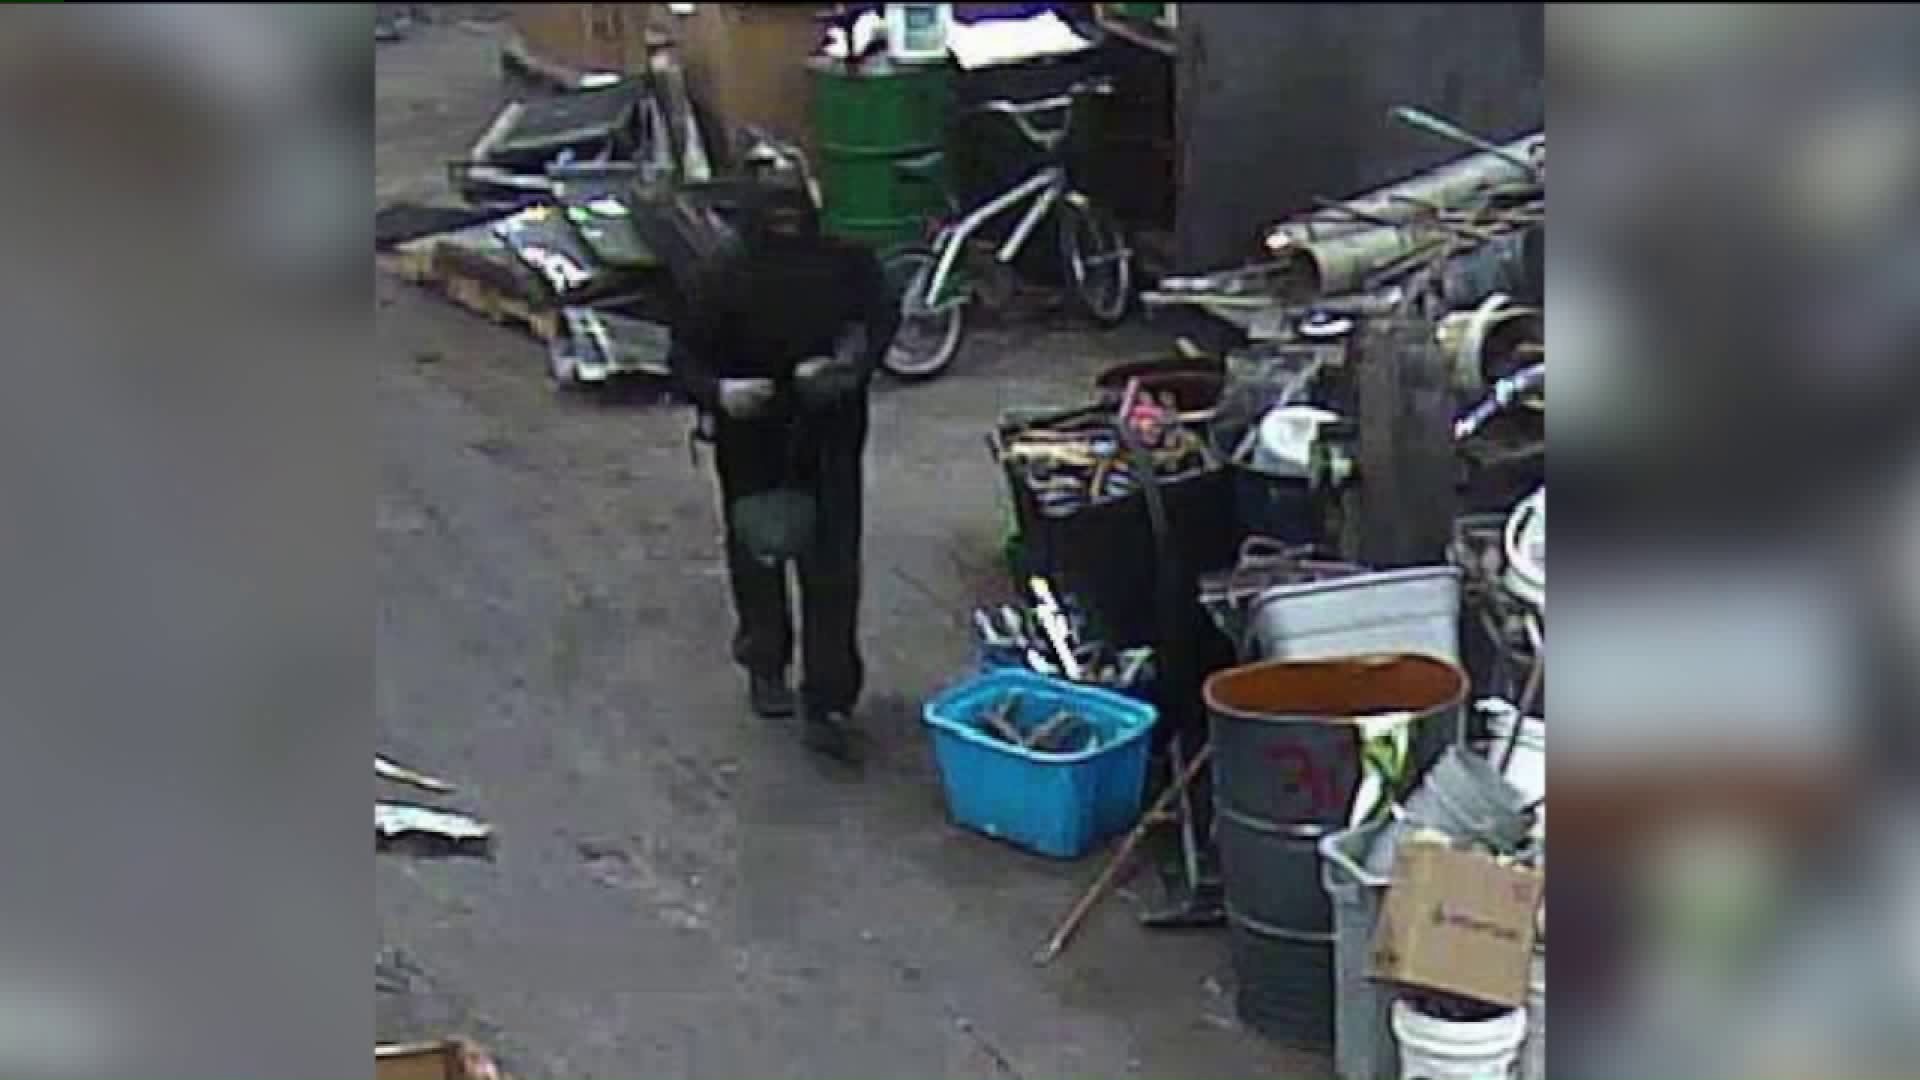 Security Camera Images from Scrap Yard Heist in Scranton